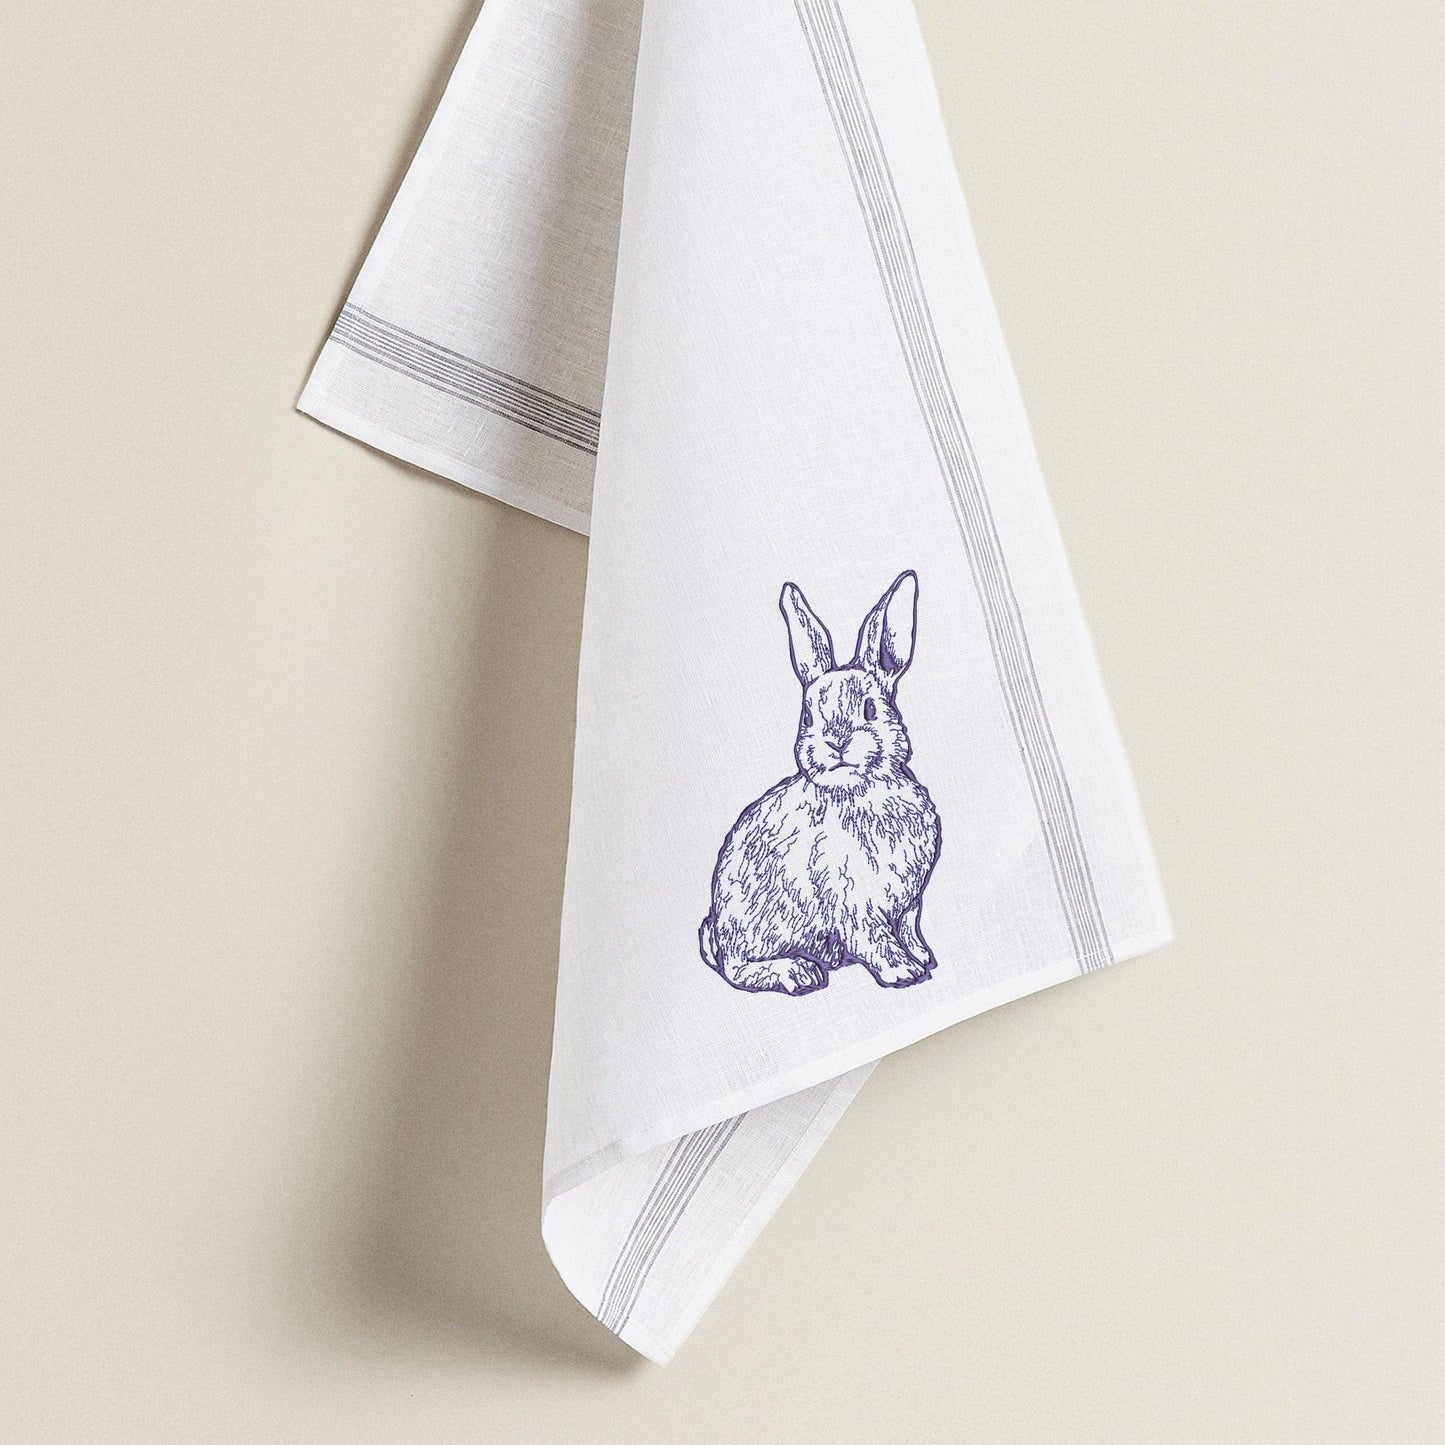 Rabbit Machine Embroidery Design on towel